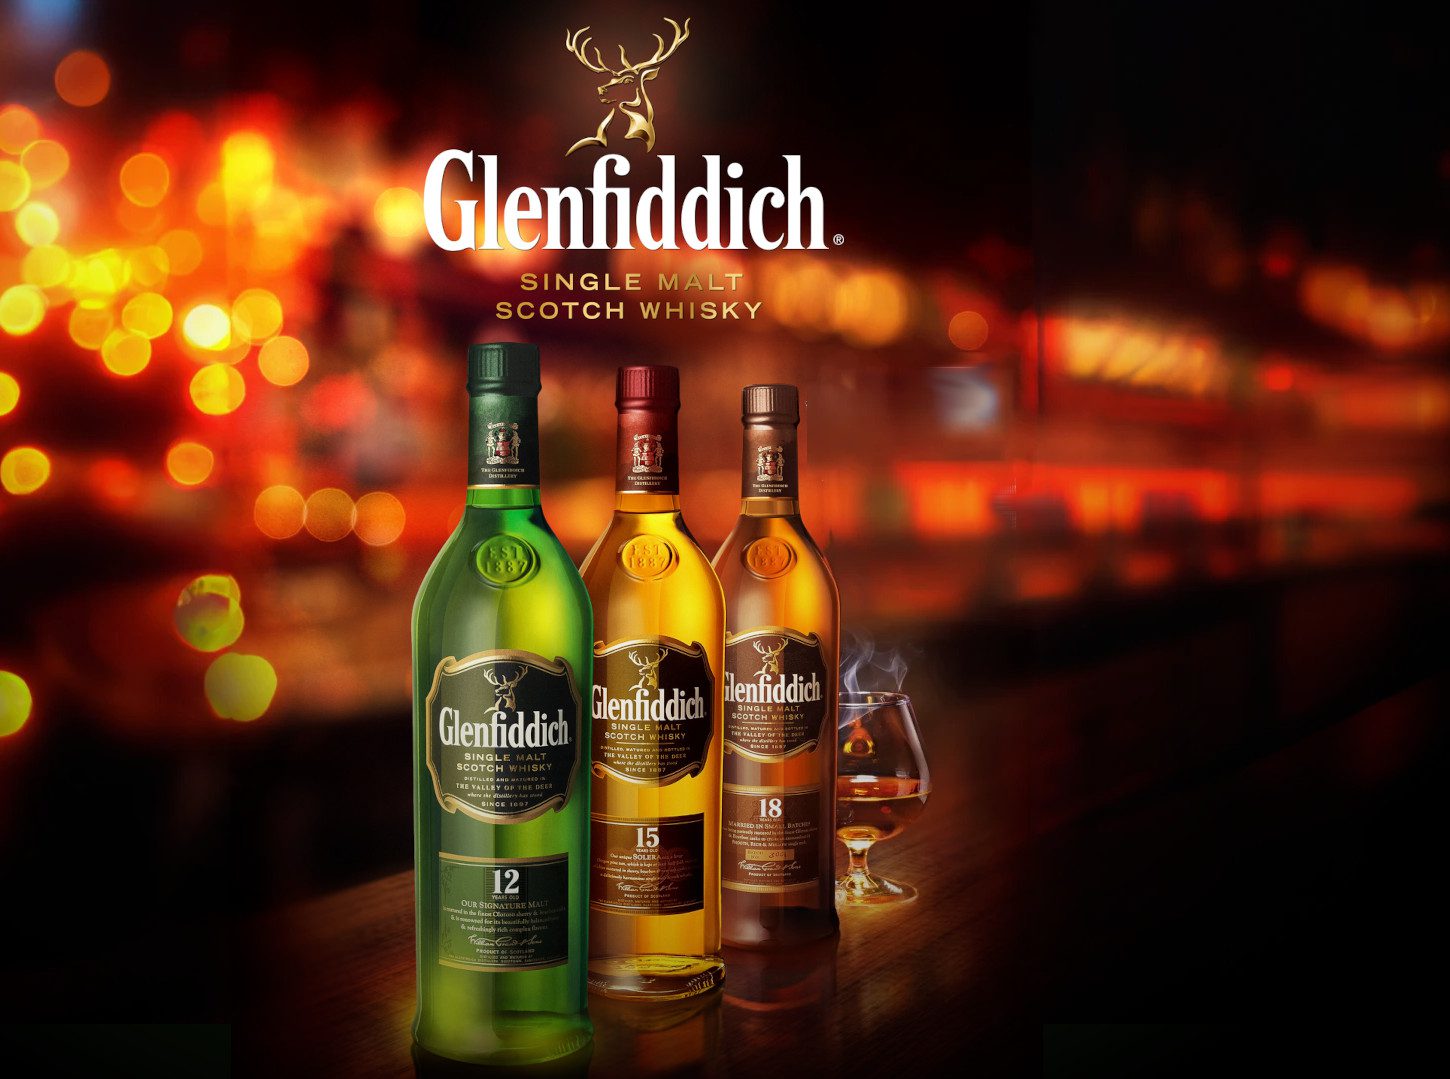 Glenfiddich: Legenda iz doline jelena